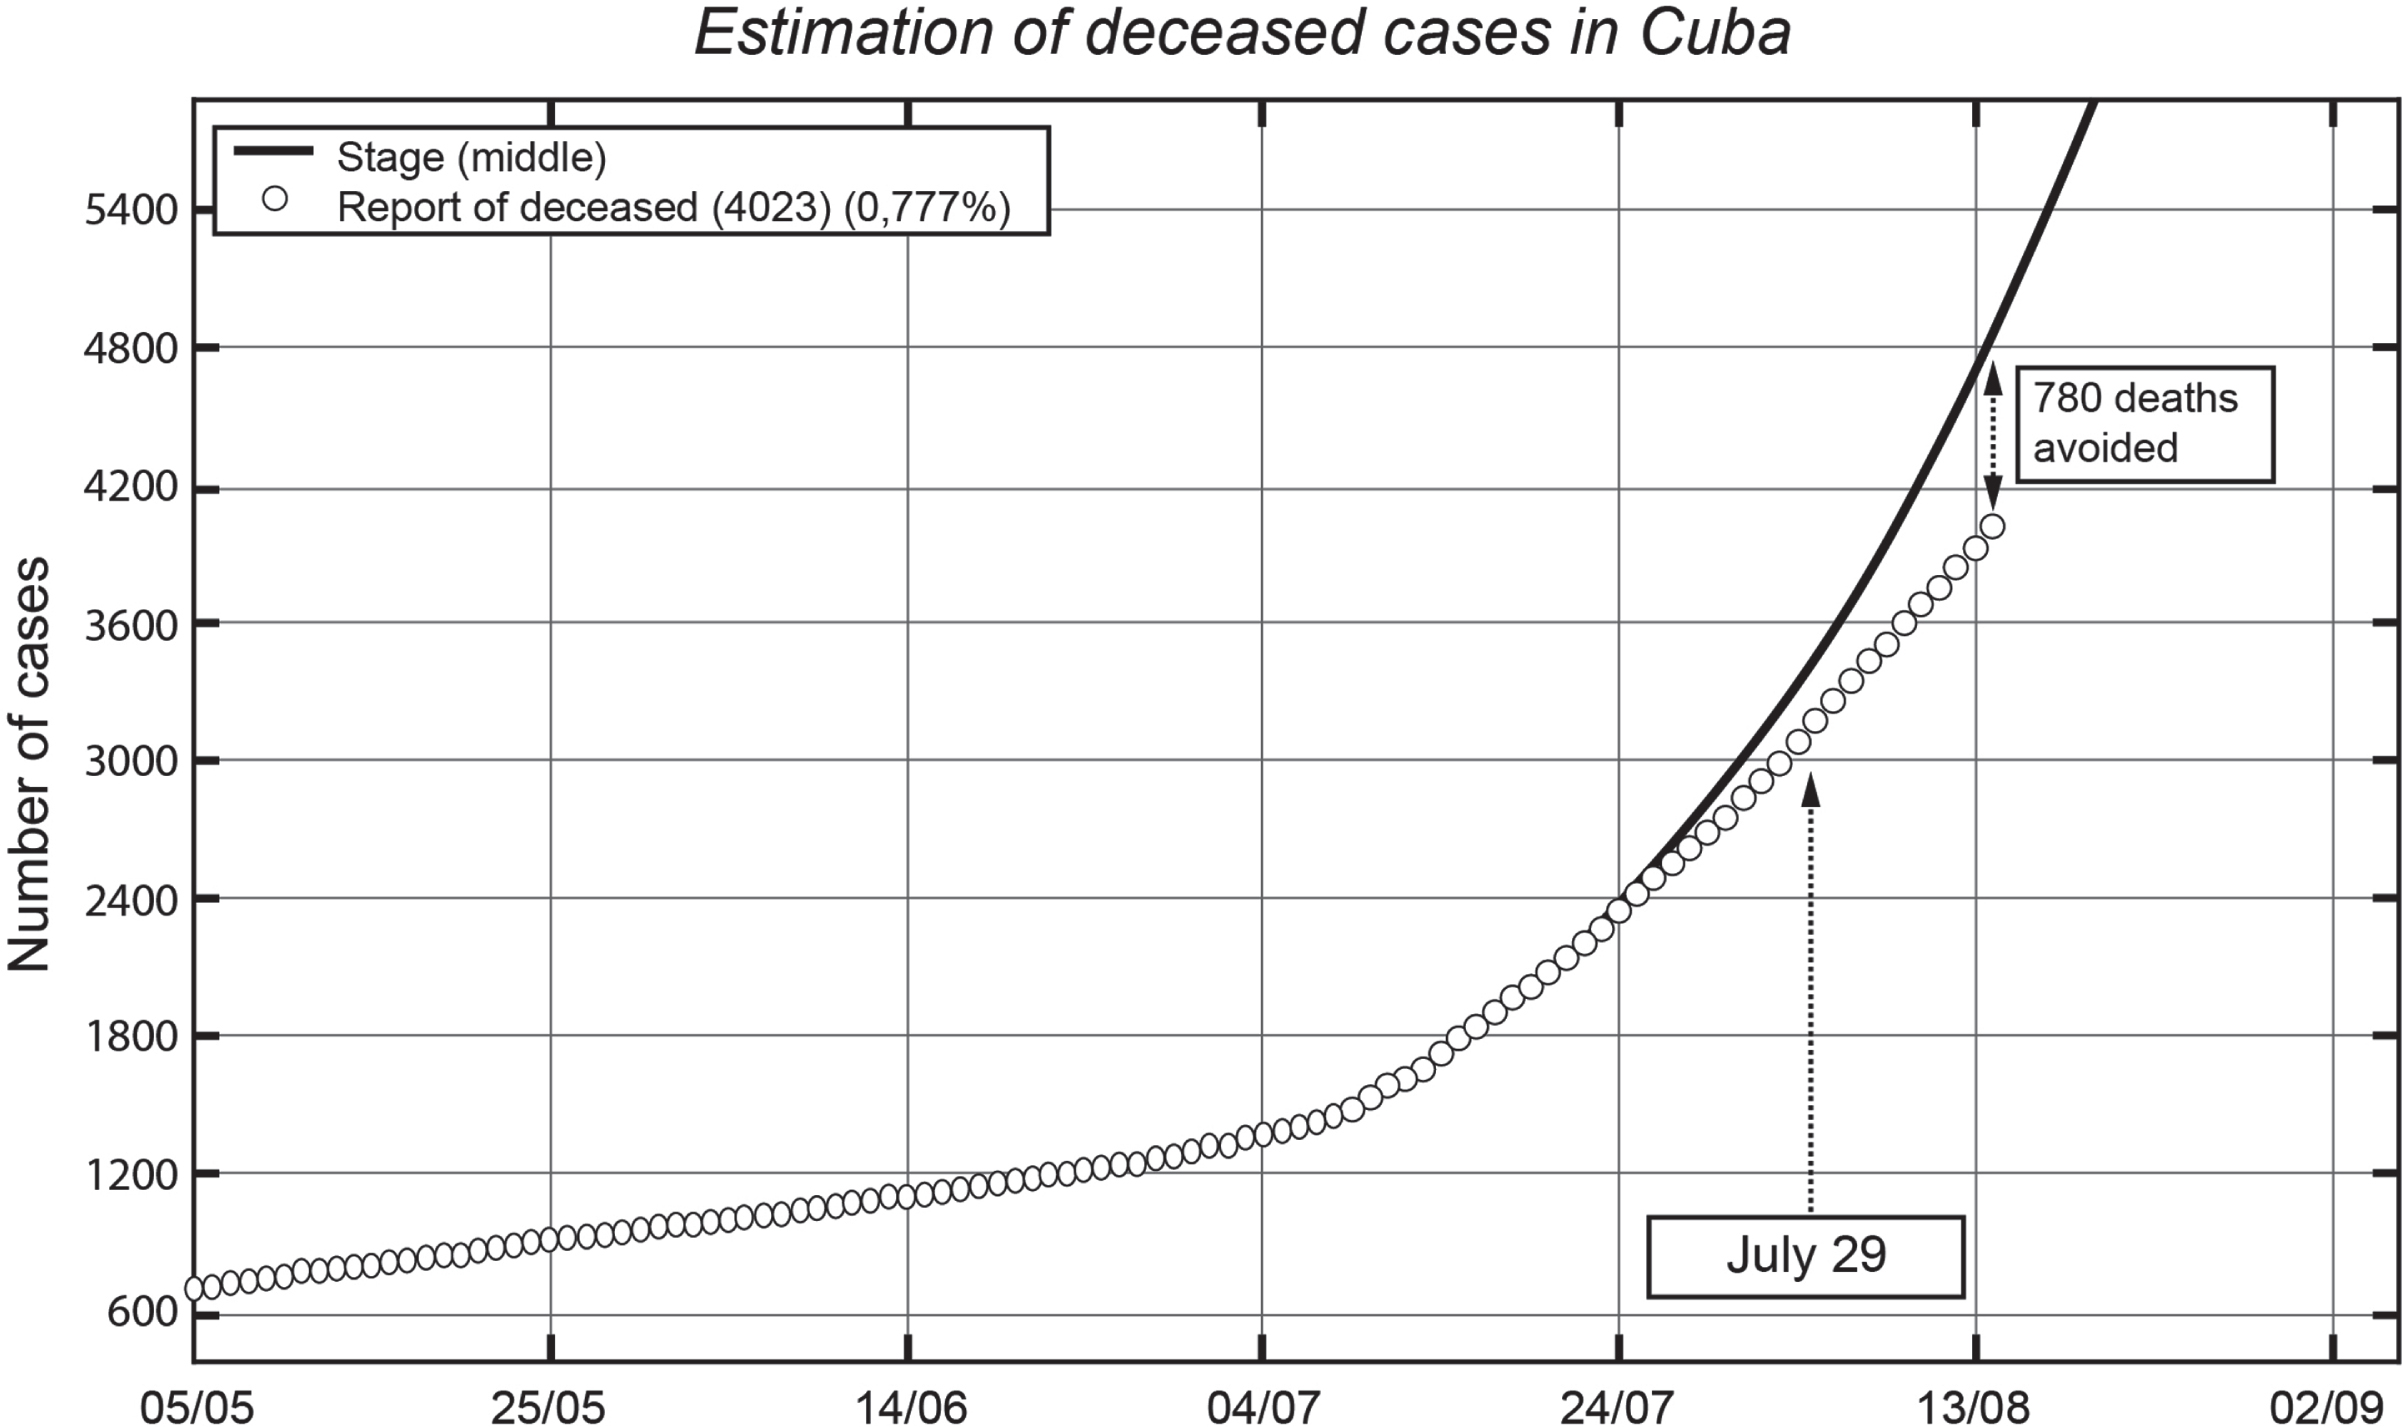 Estimation of deceased cases in Cuba. Source: Cubadebate Official Site [30].